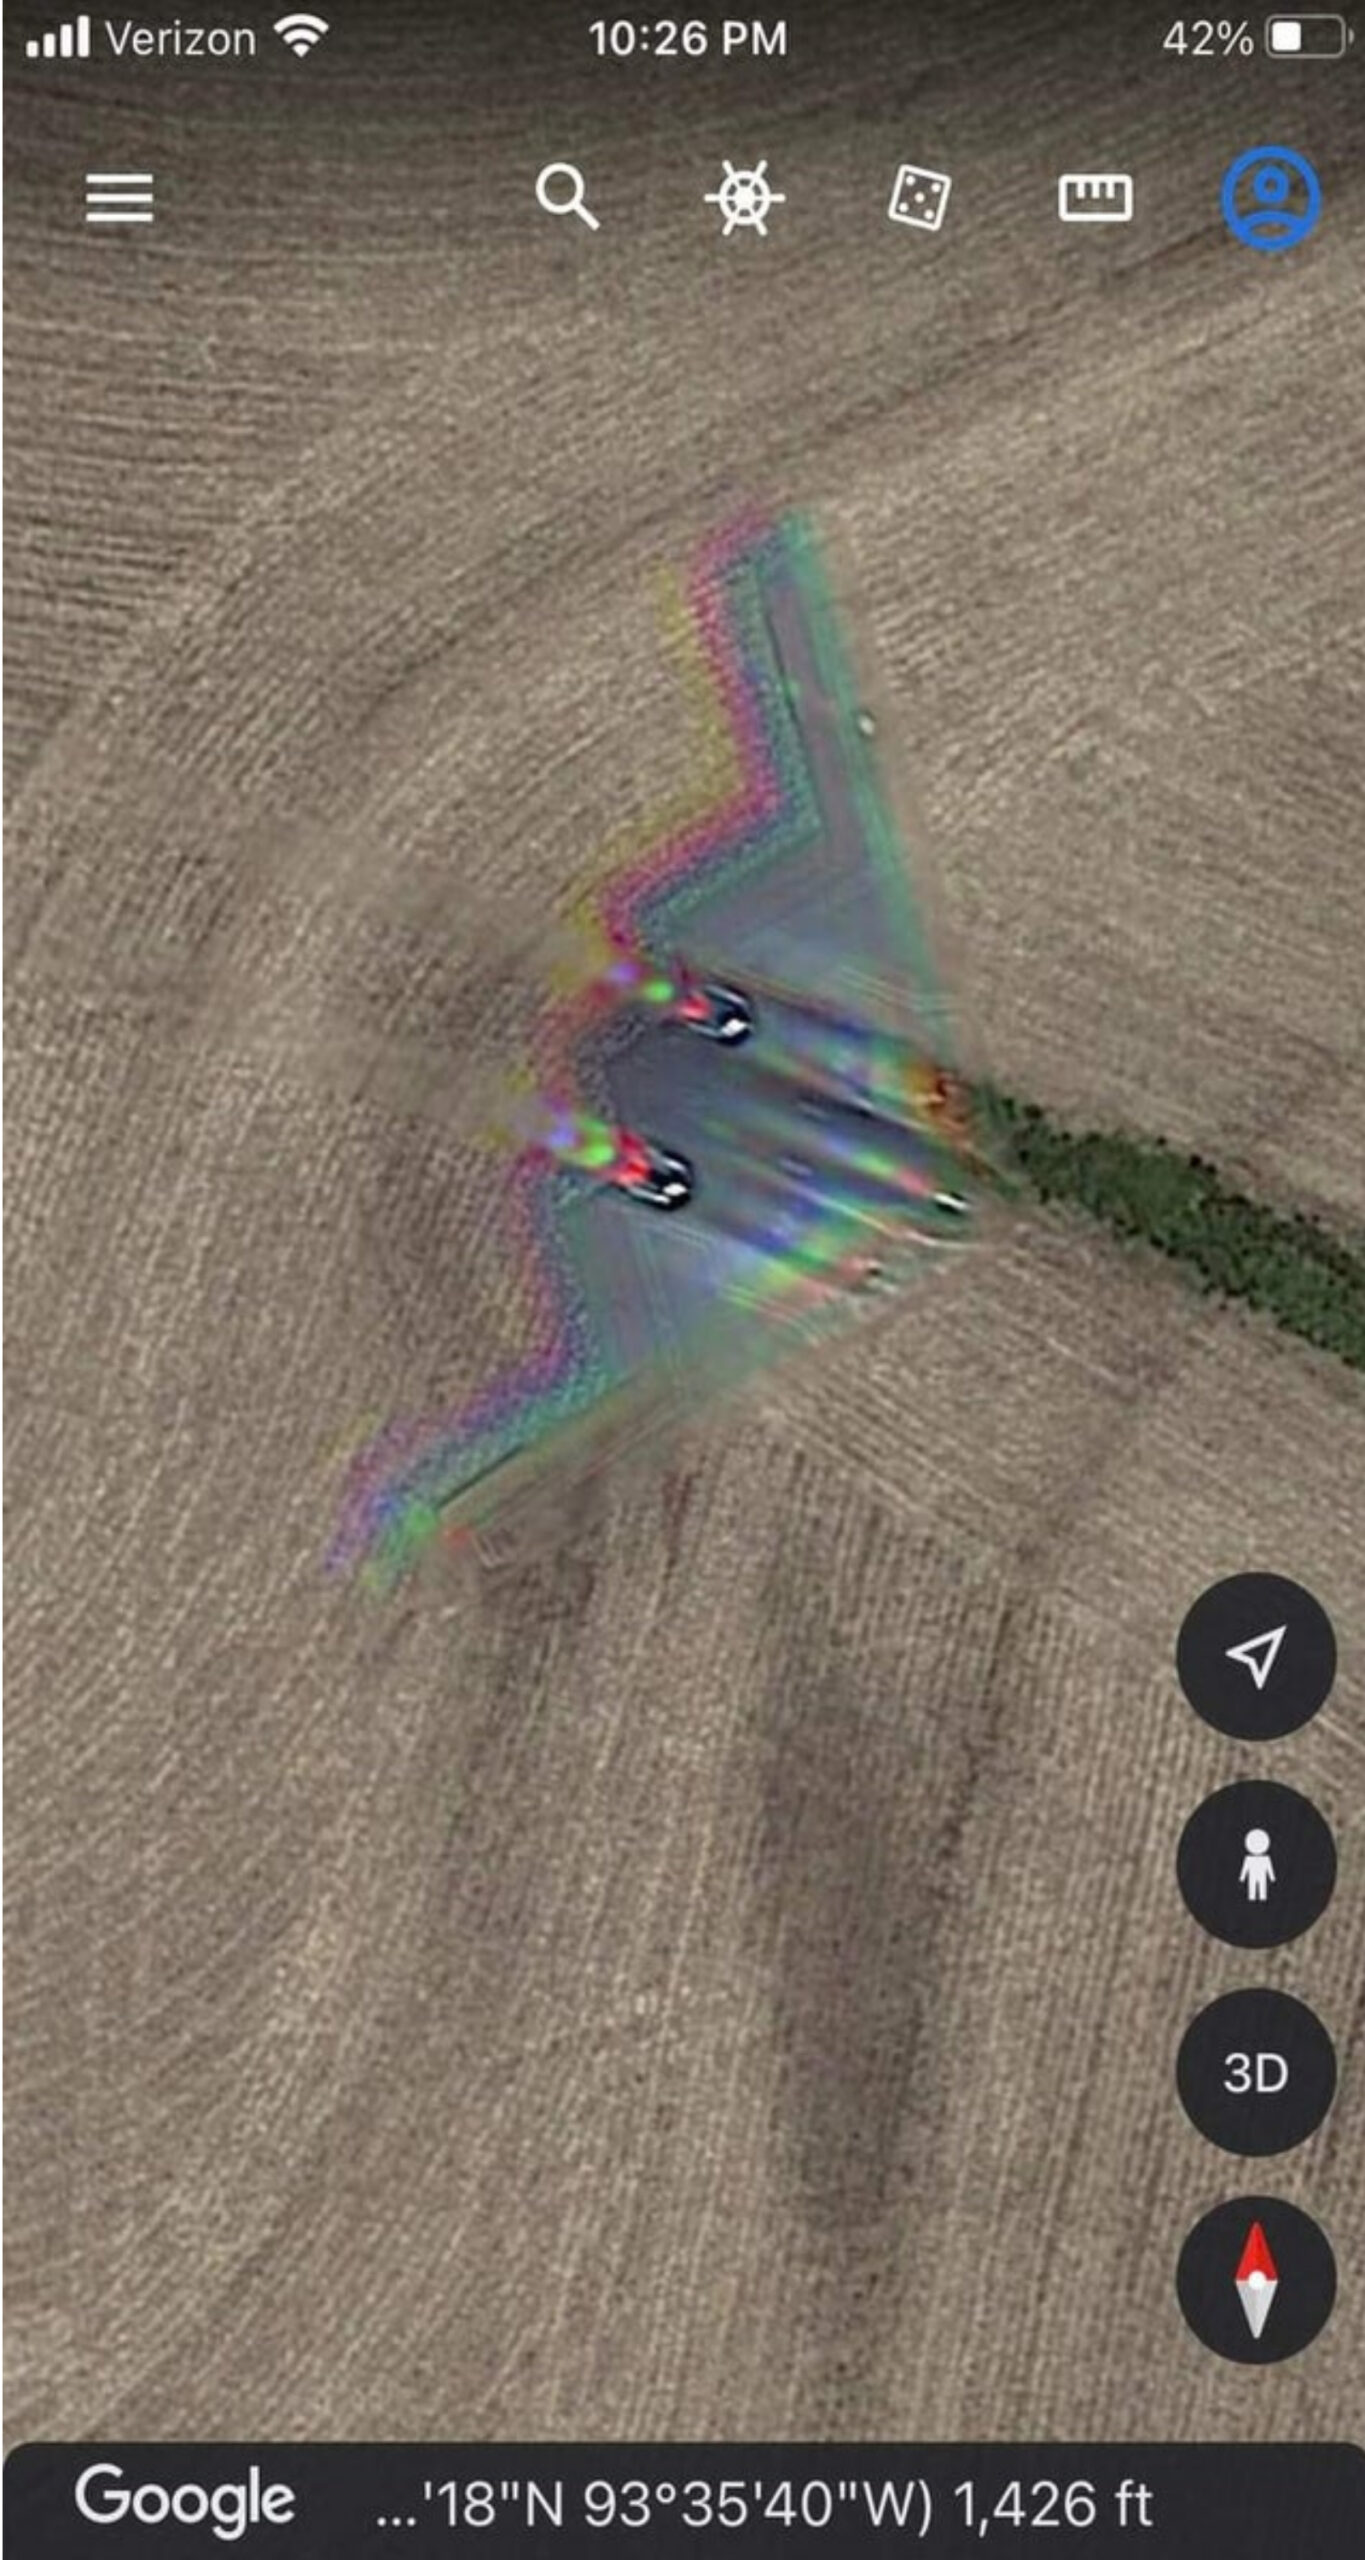 Google Earth Stealth Bomber Caught Flying Over Farm!